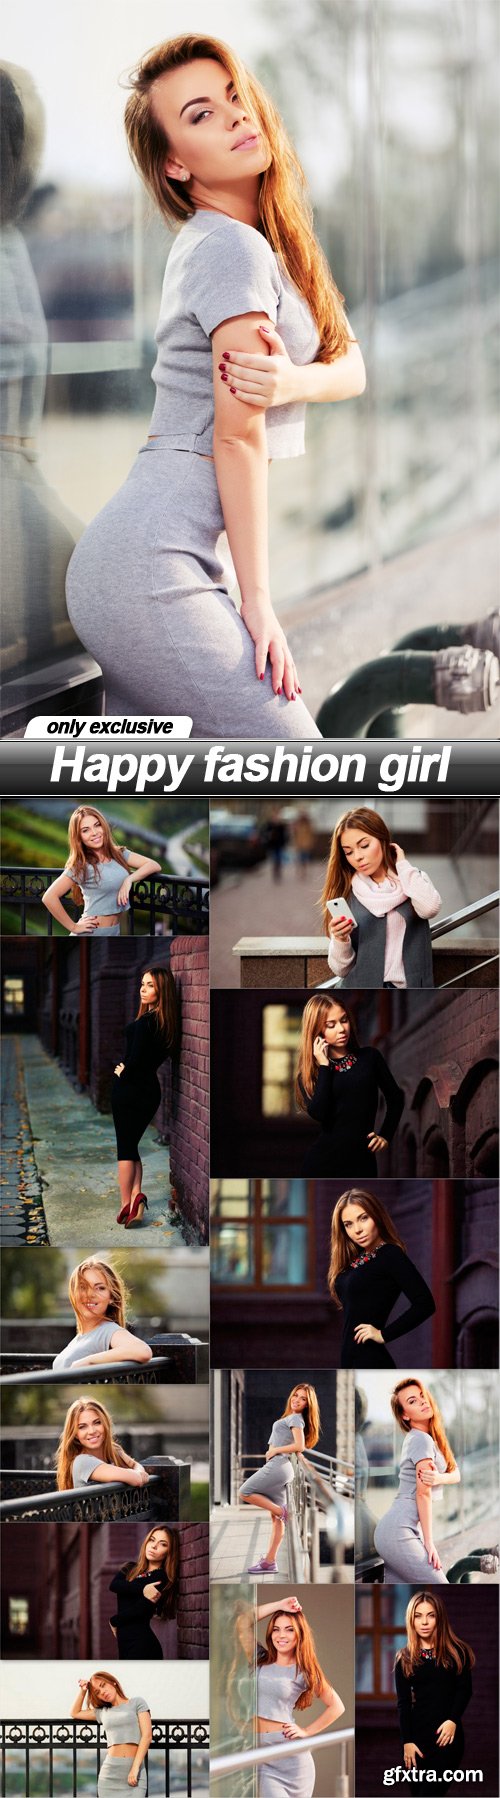 Happy fashion girl - 13 UHQ JPEG